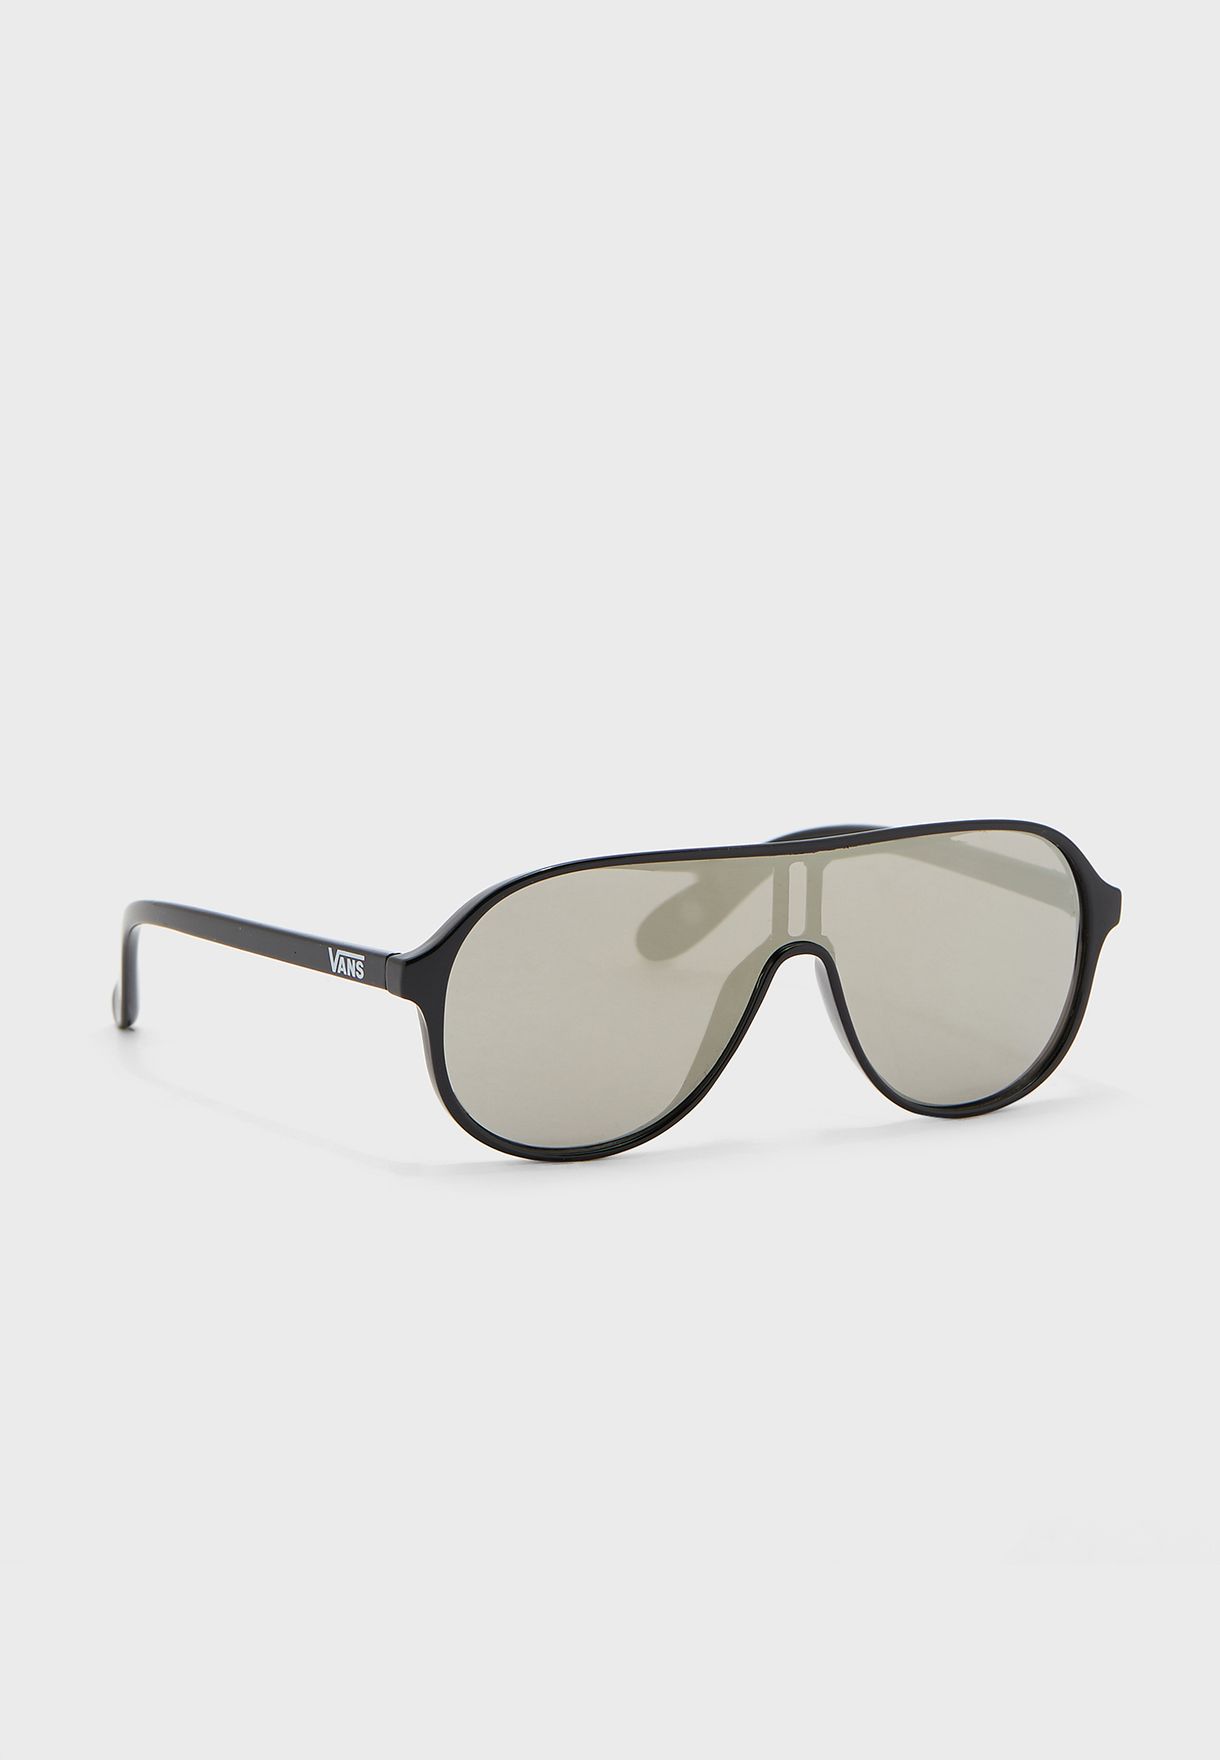 Bremerton Shades Sunglasses